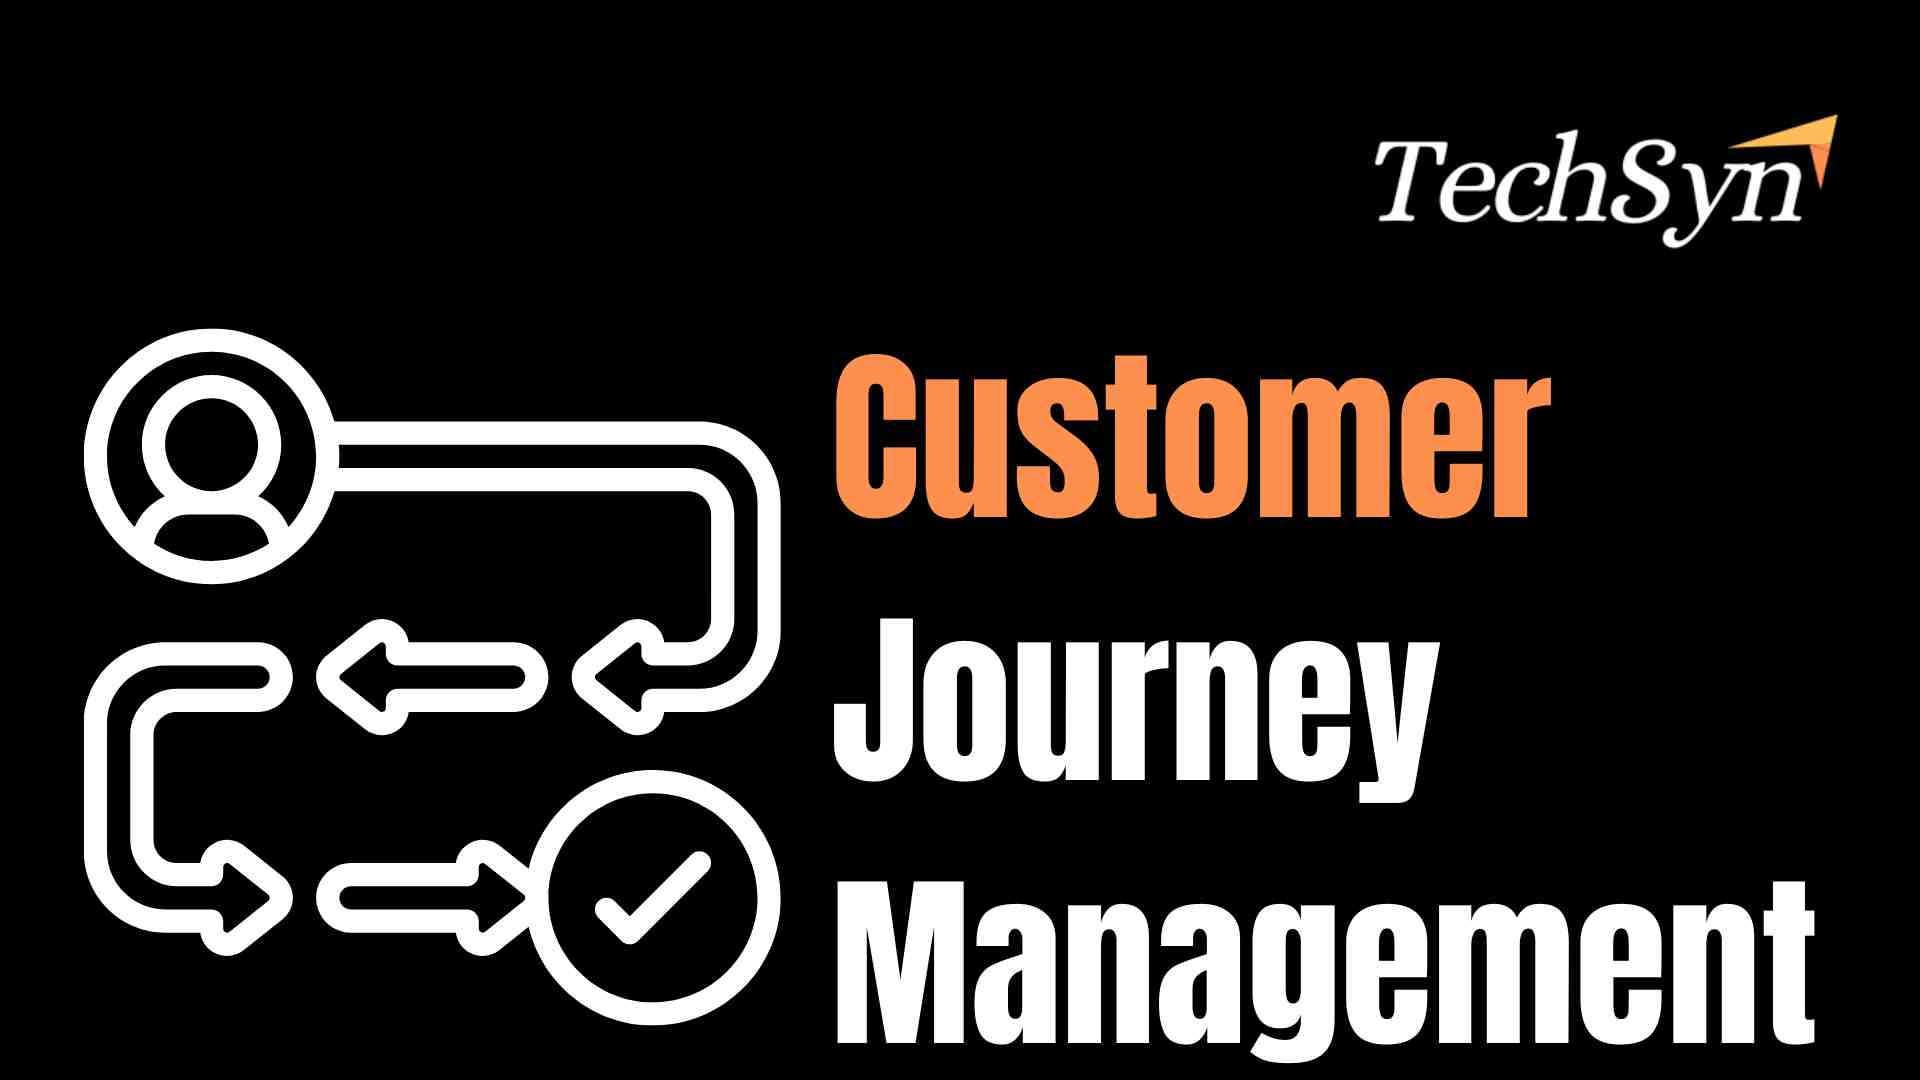 Techsyn Customer Journey Management